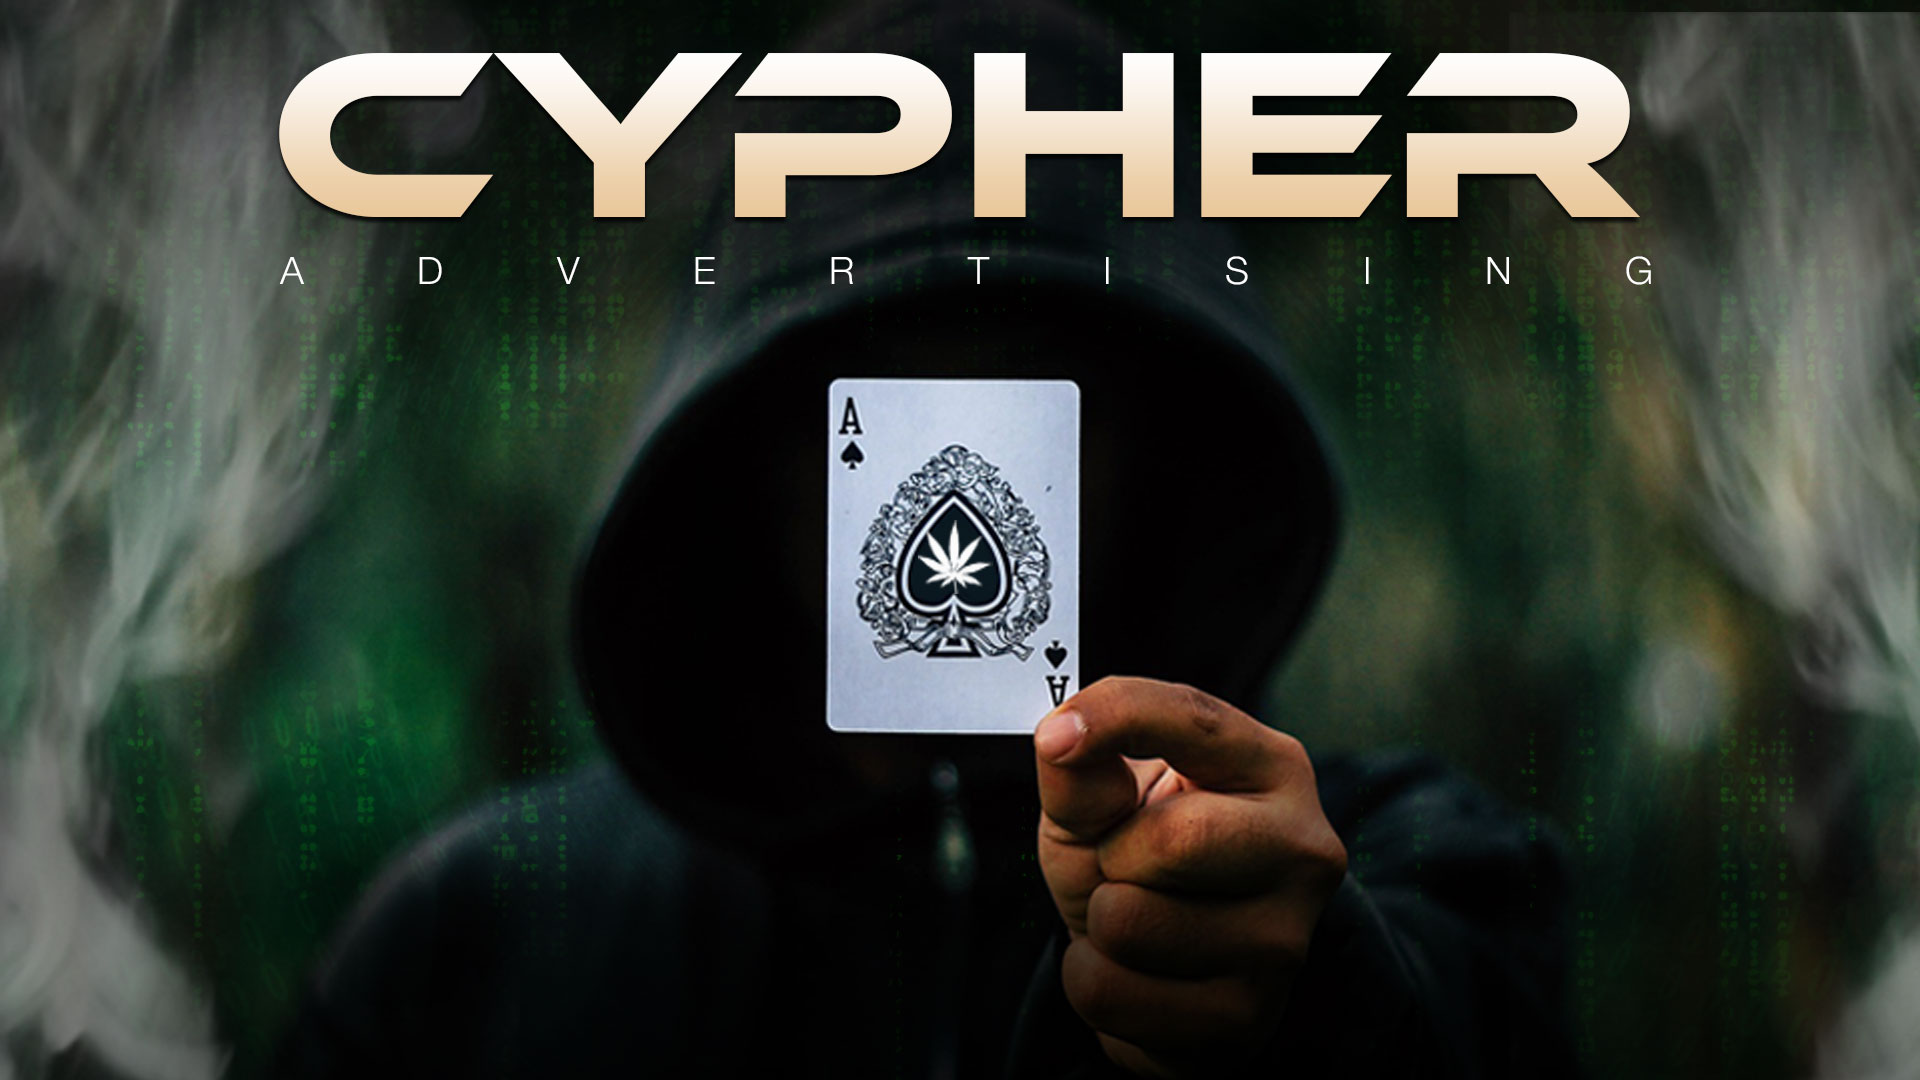 Cypher Advertising